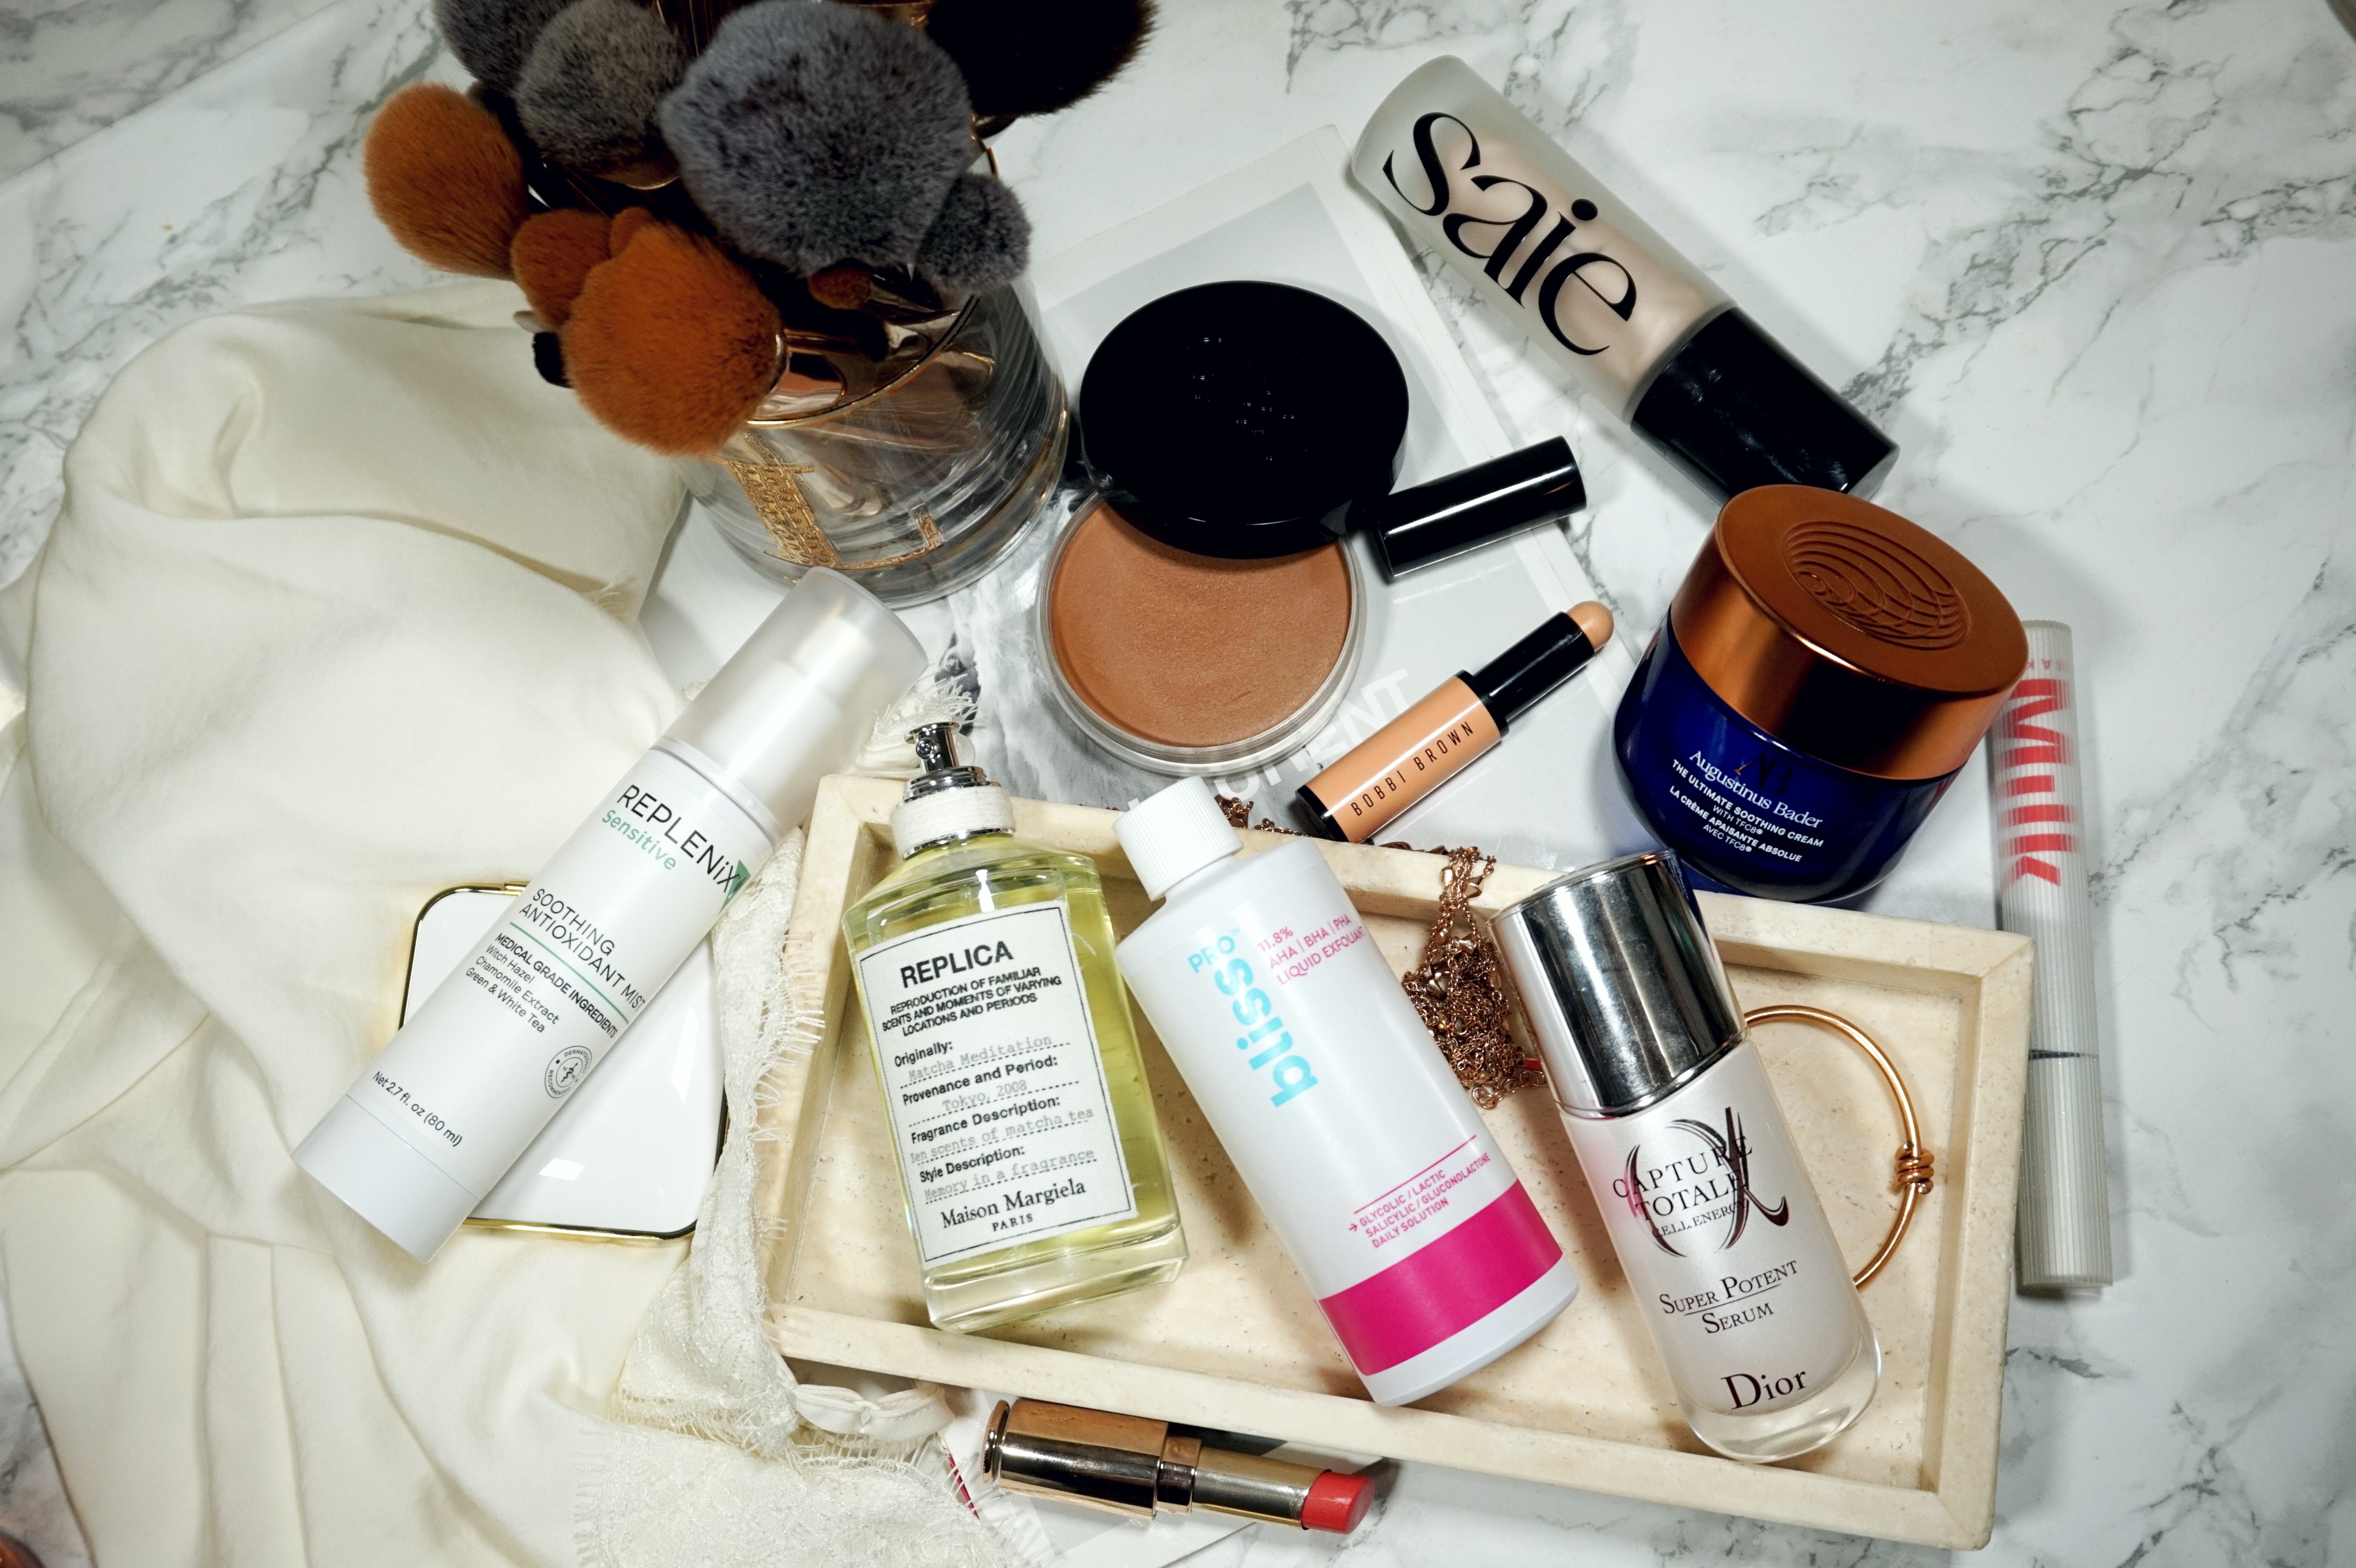 Beauty: La Solution 10 de CHANEL Sensitive Skin Cream, Style Blog